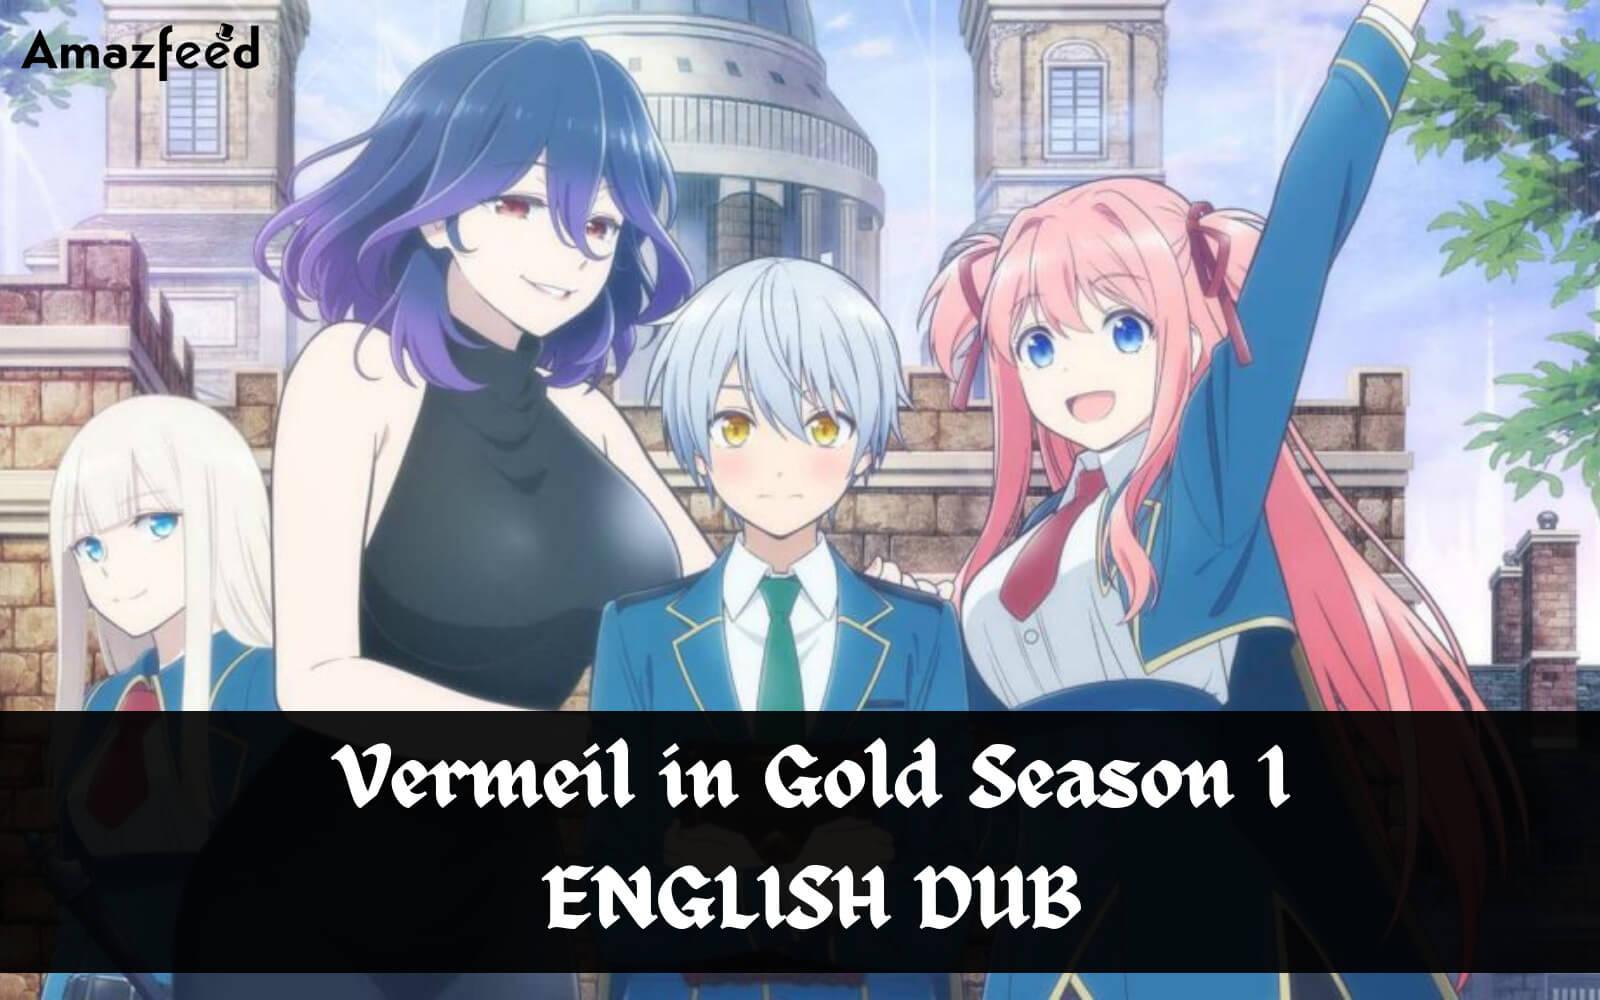 Vermeil in Gold Season 1 ENGLISH DUB RELEASE DATE